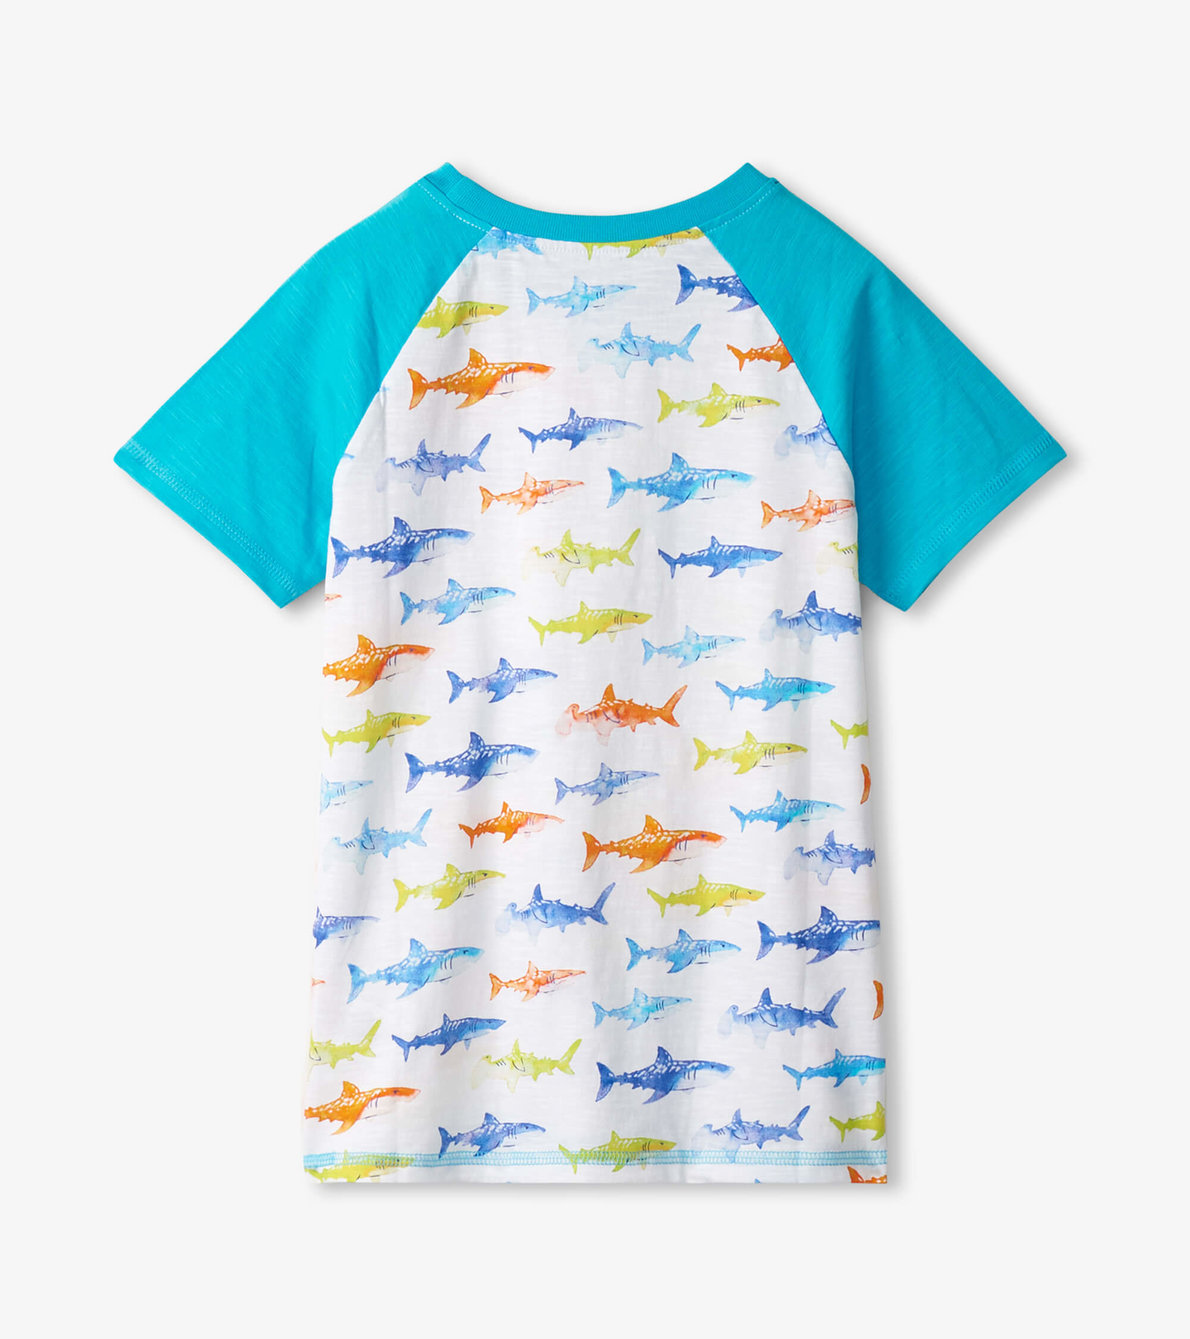 View larger image of Boys Painted Sharks Raglan T-Shirt